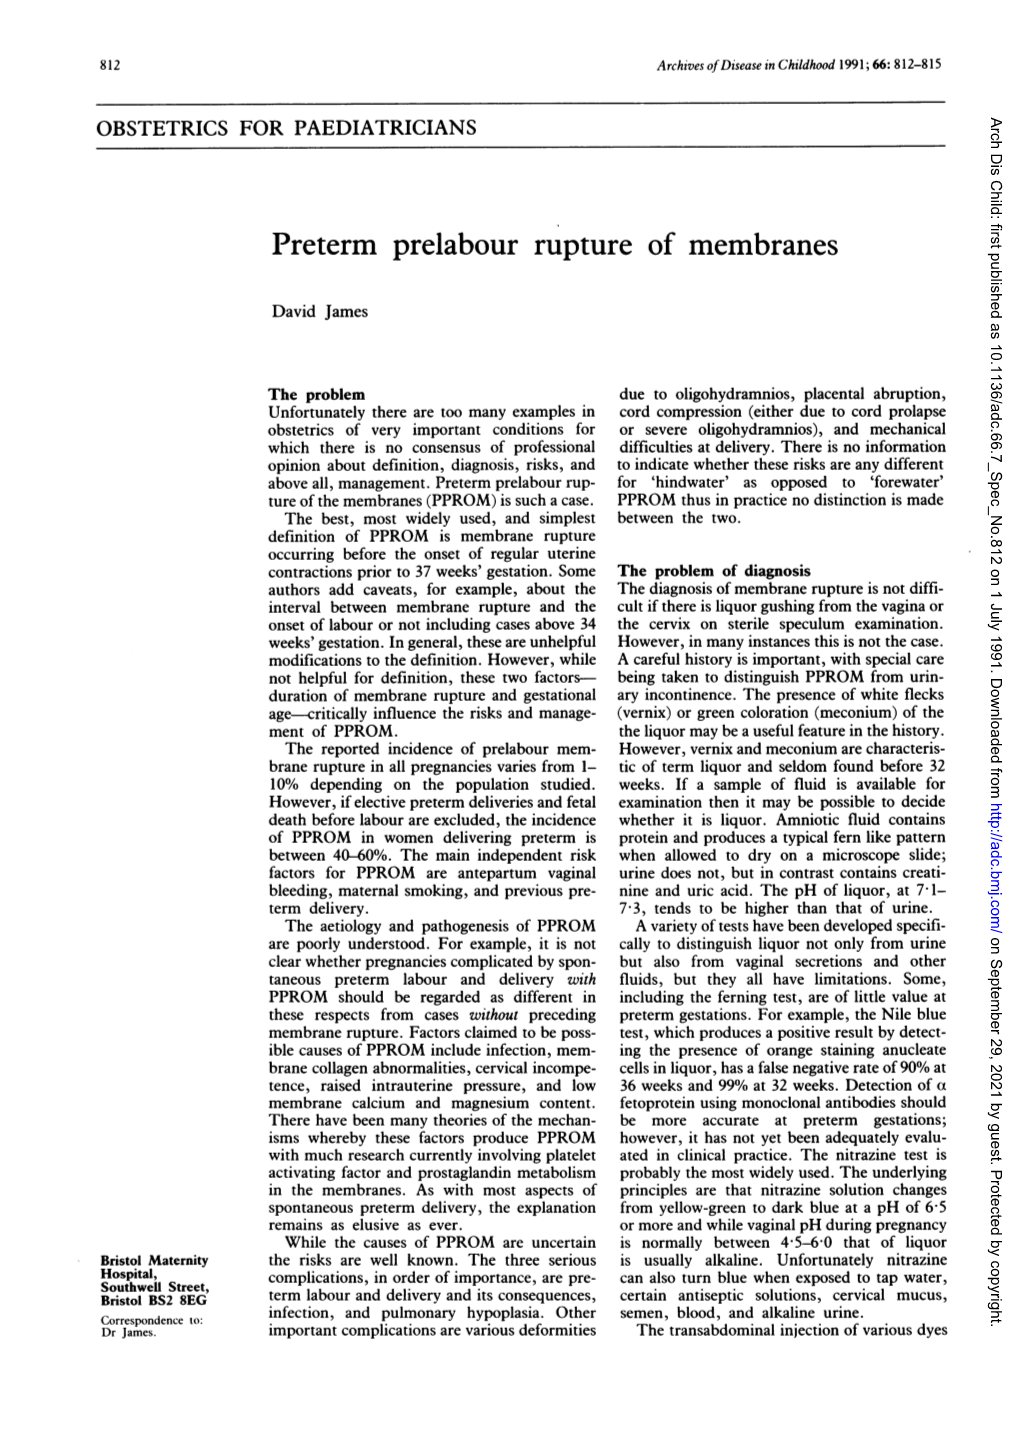 Preterm Prelabour Rupture of Membranes